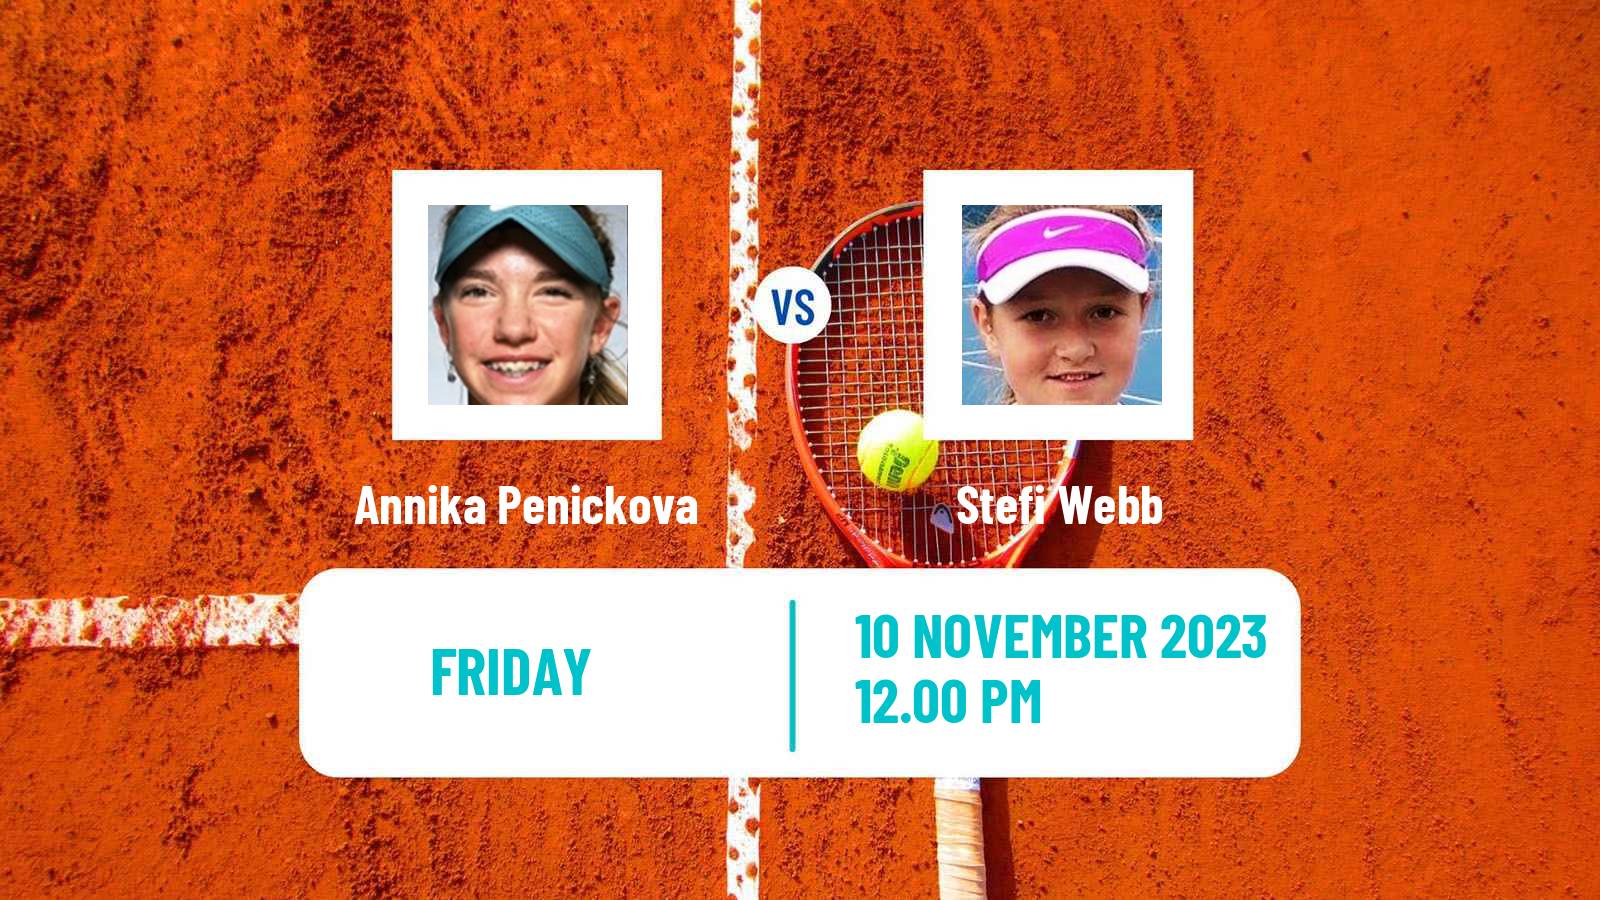 Tennis ITF W15 Champaign Il Women Annika Penickova - Stefi Webb